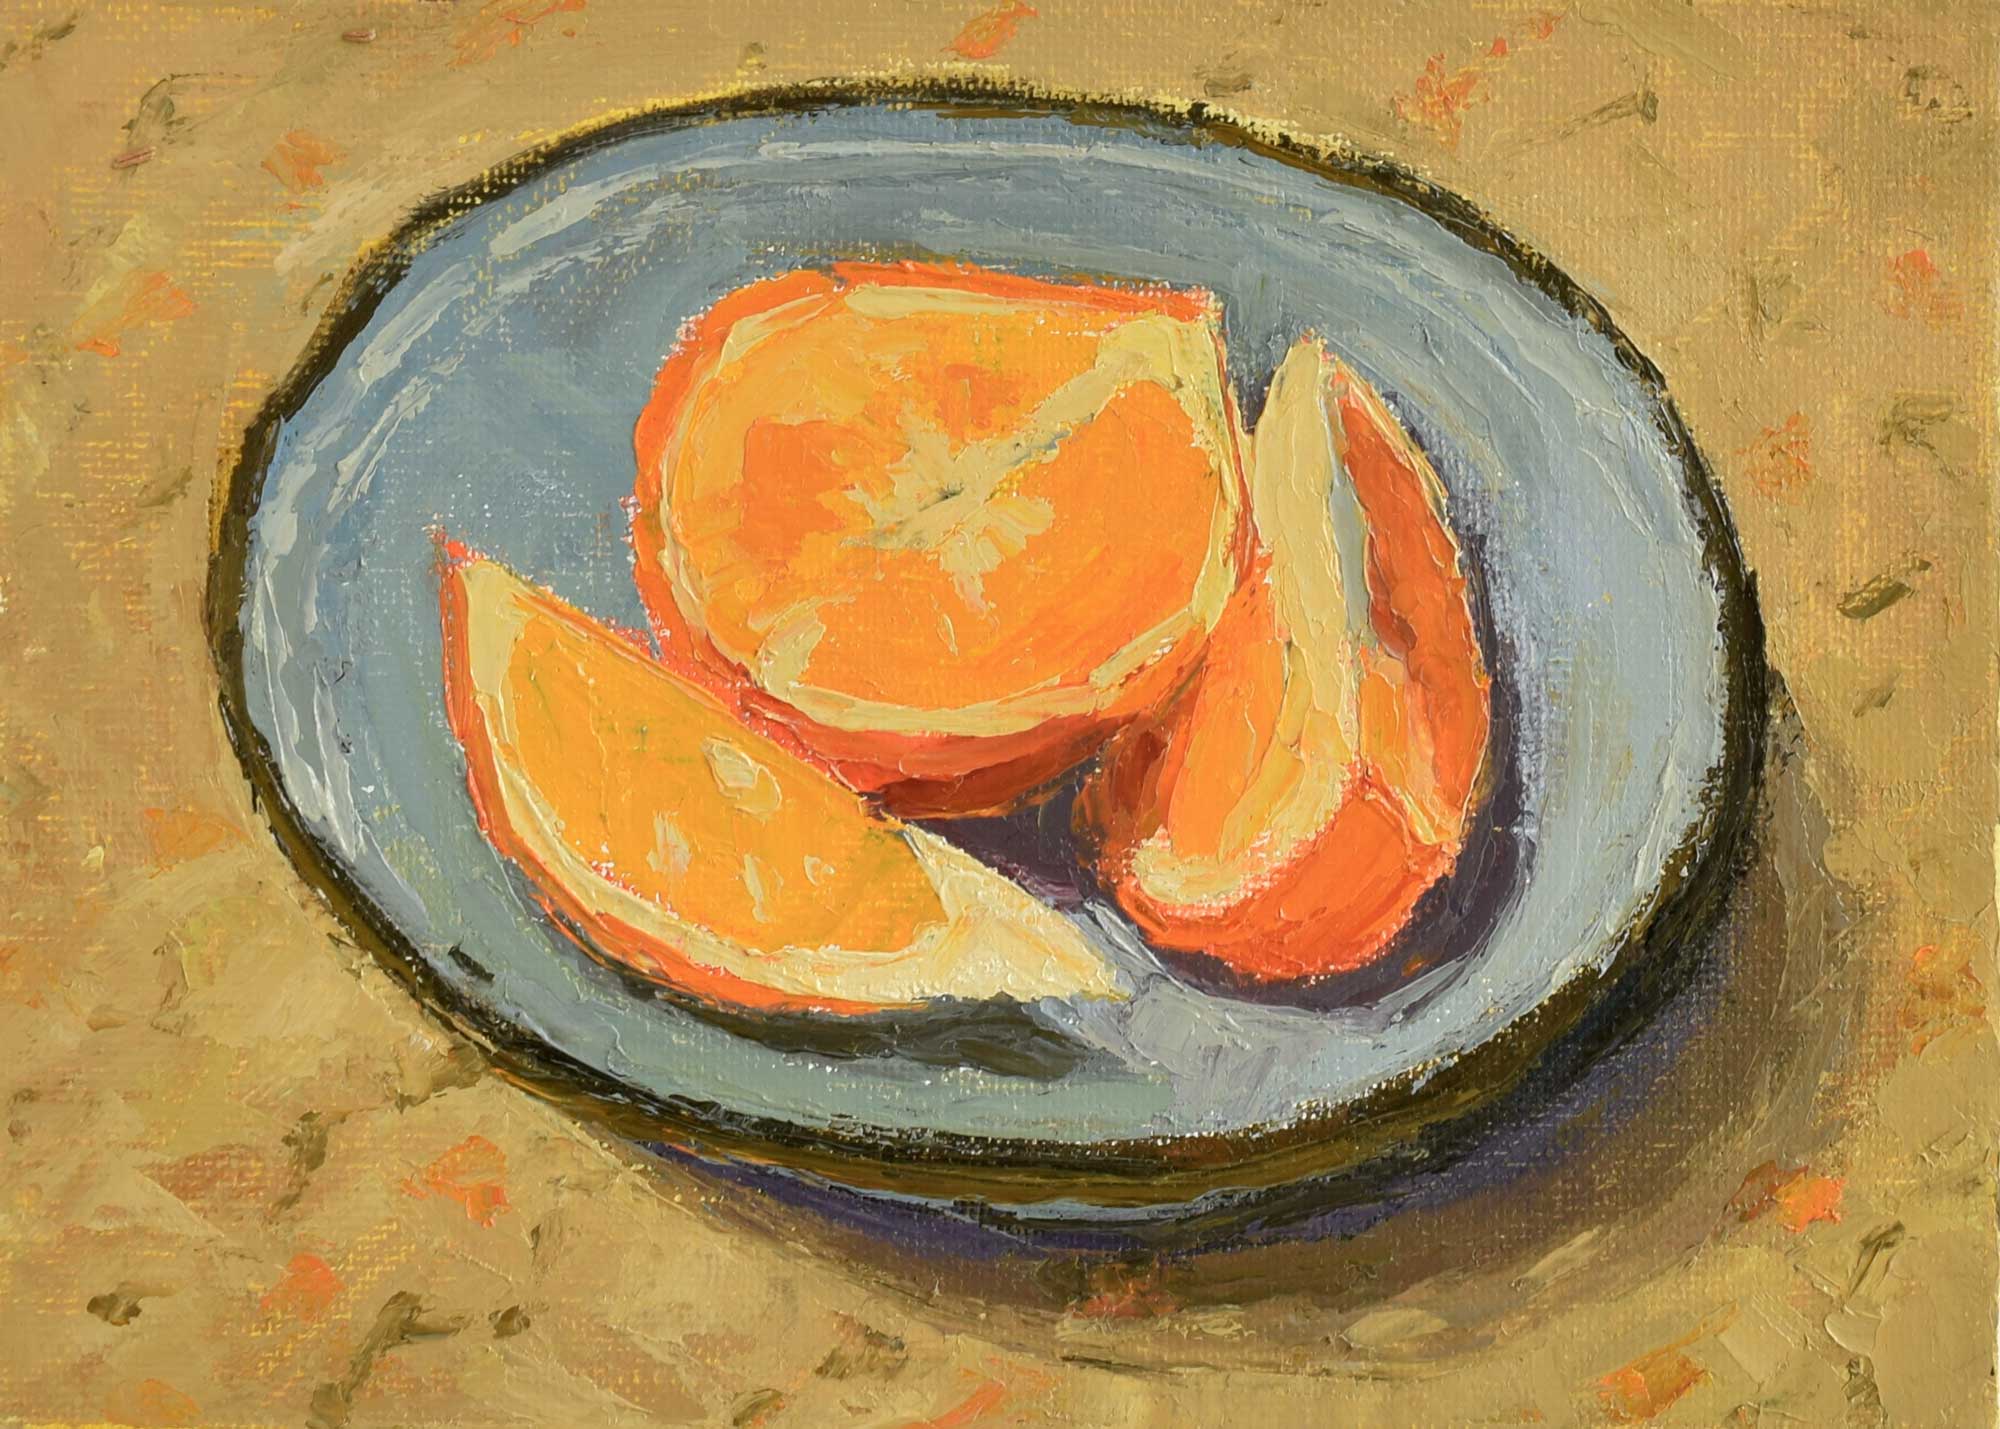 Mandarinquat on Blue Plate